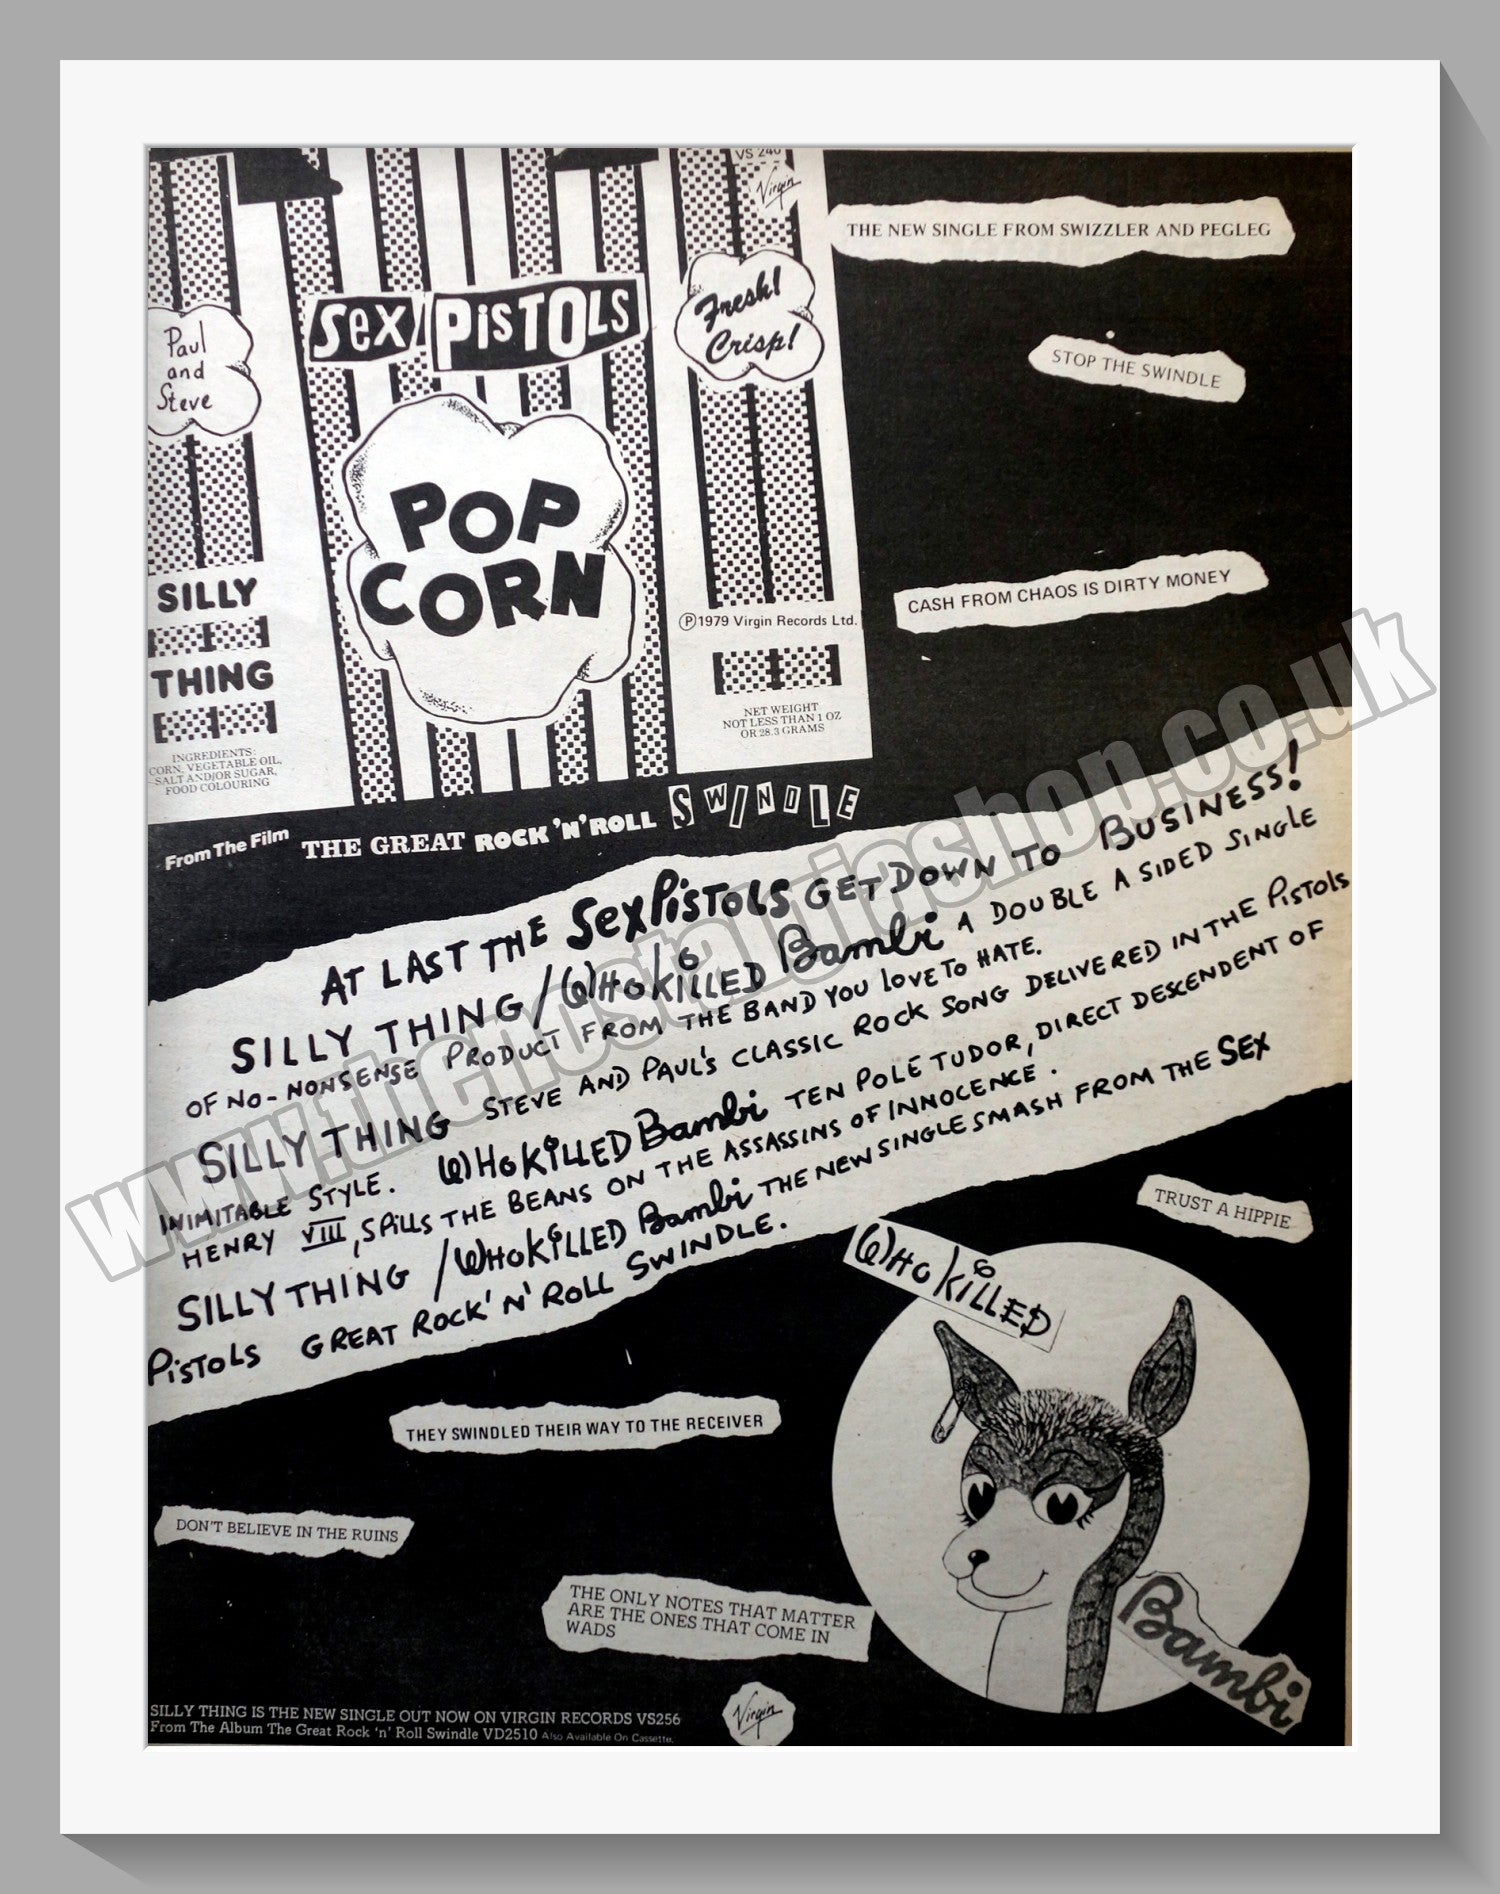 Sex Pistols Who Killed Bambi Original Vintage Advert 1979 Ref Ad1470 The Nostalgia Shop 3412